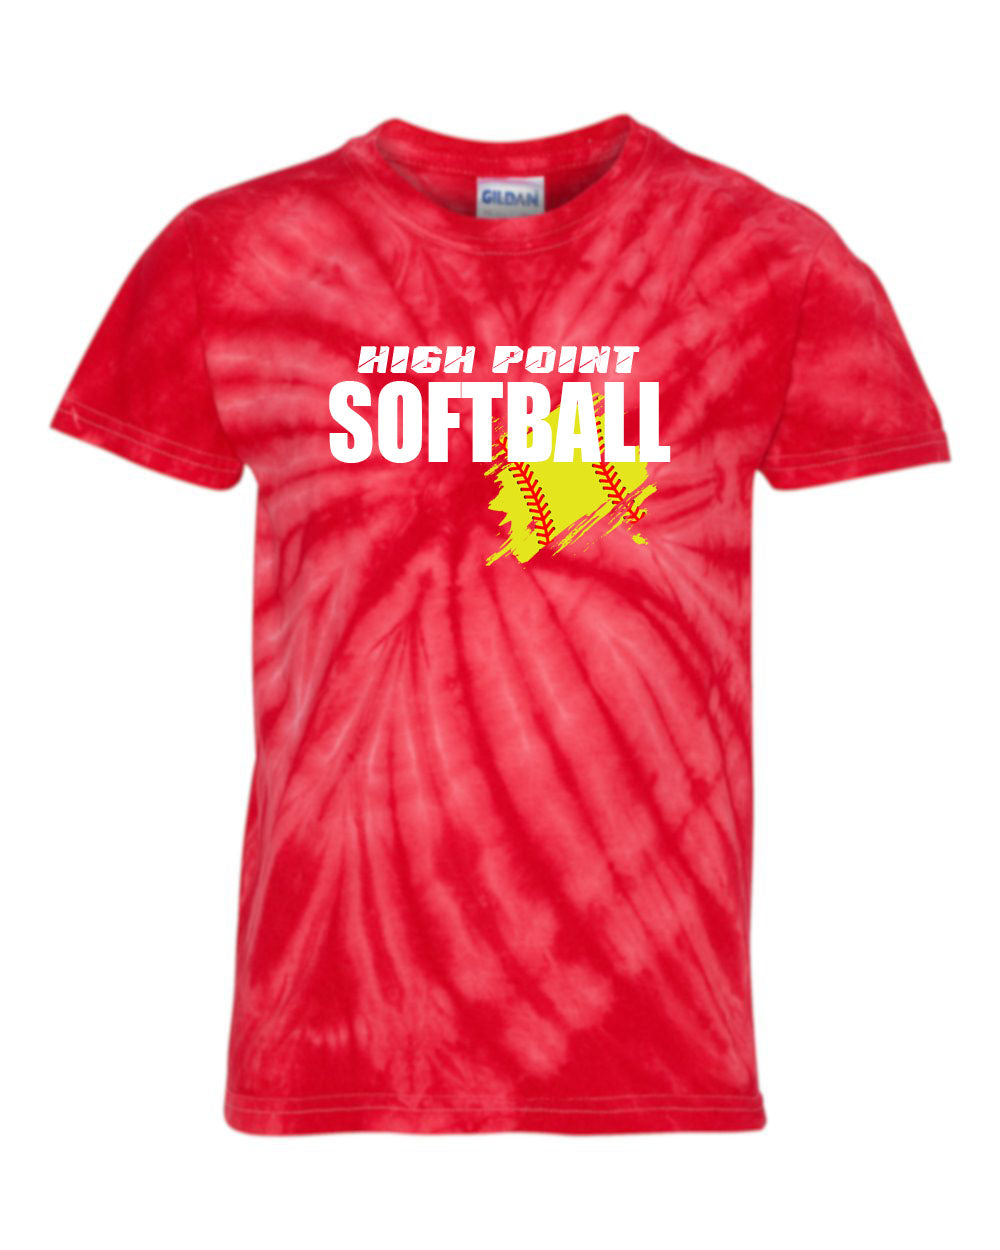 High Point Softball Tie Dye t-shirt Design 3